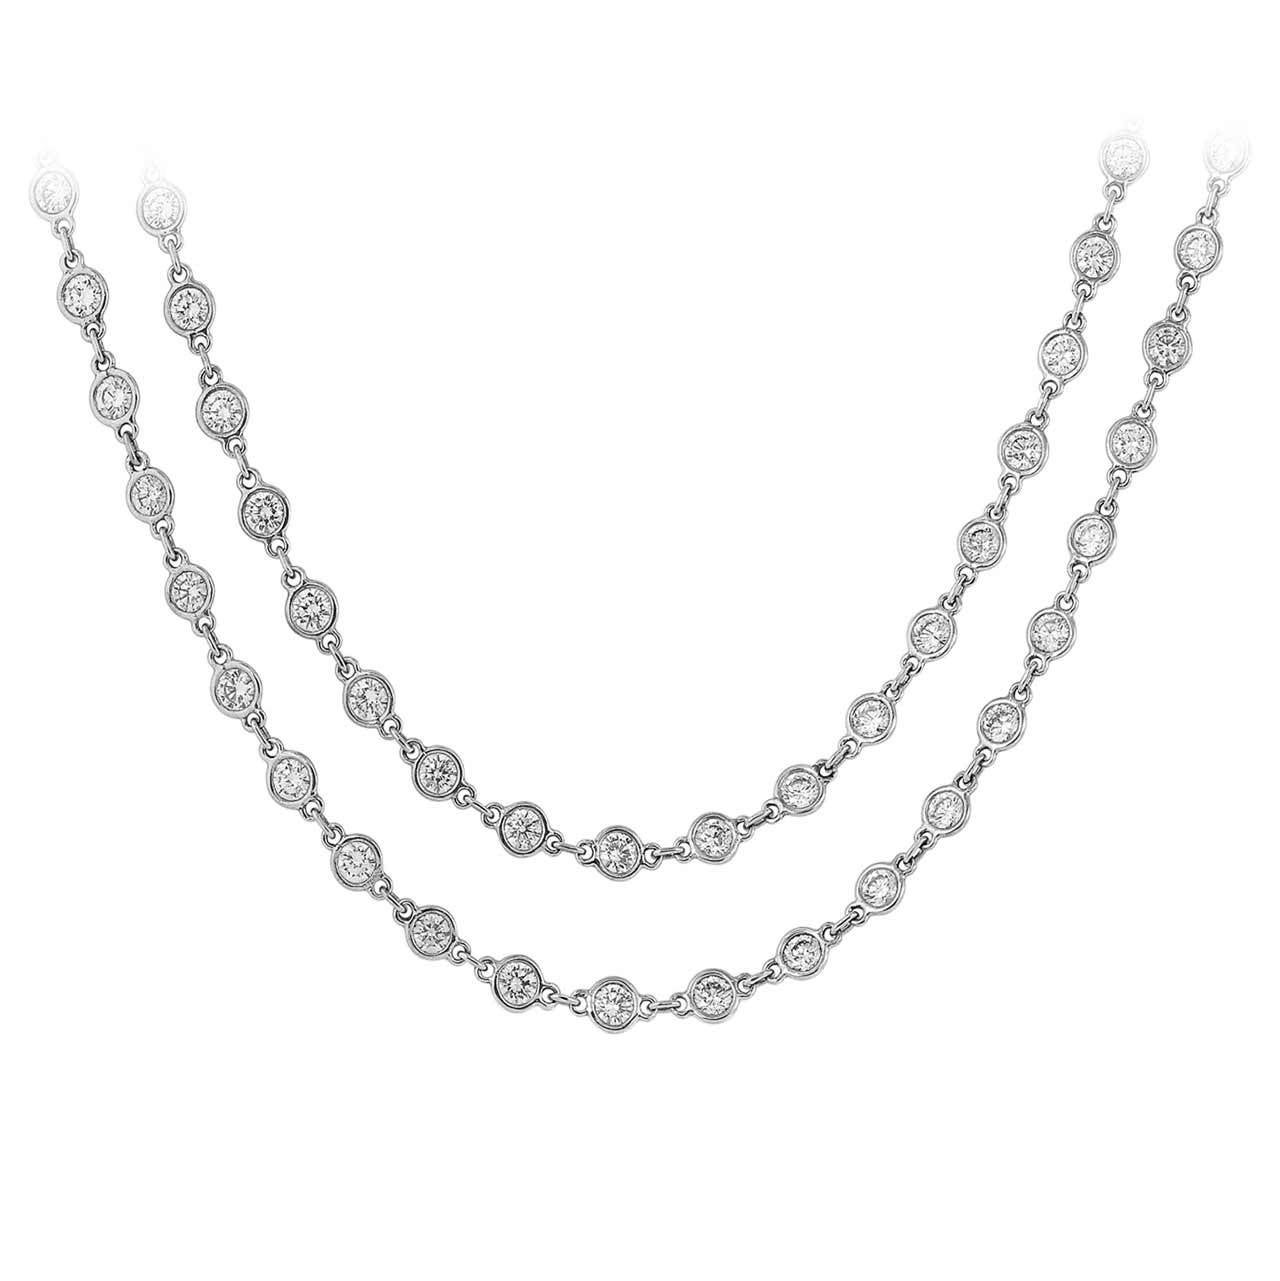 27.53 Carat Diamond Gold Chain Necklace